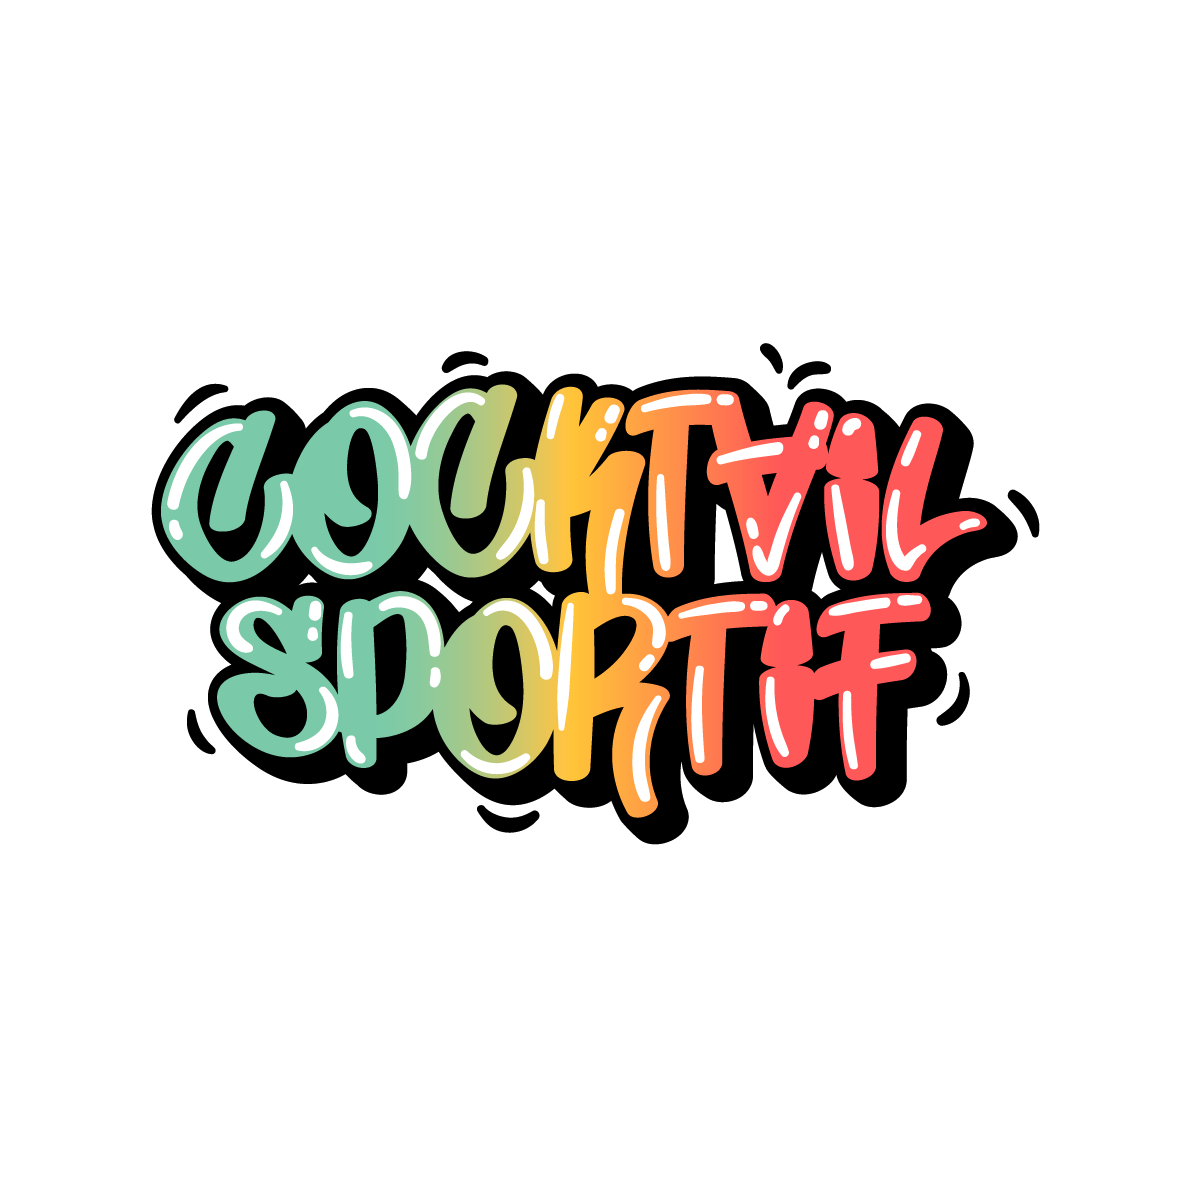 logo cocktail sportif couleurs